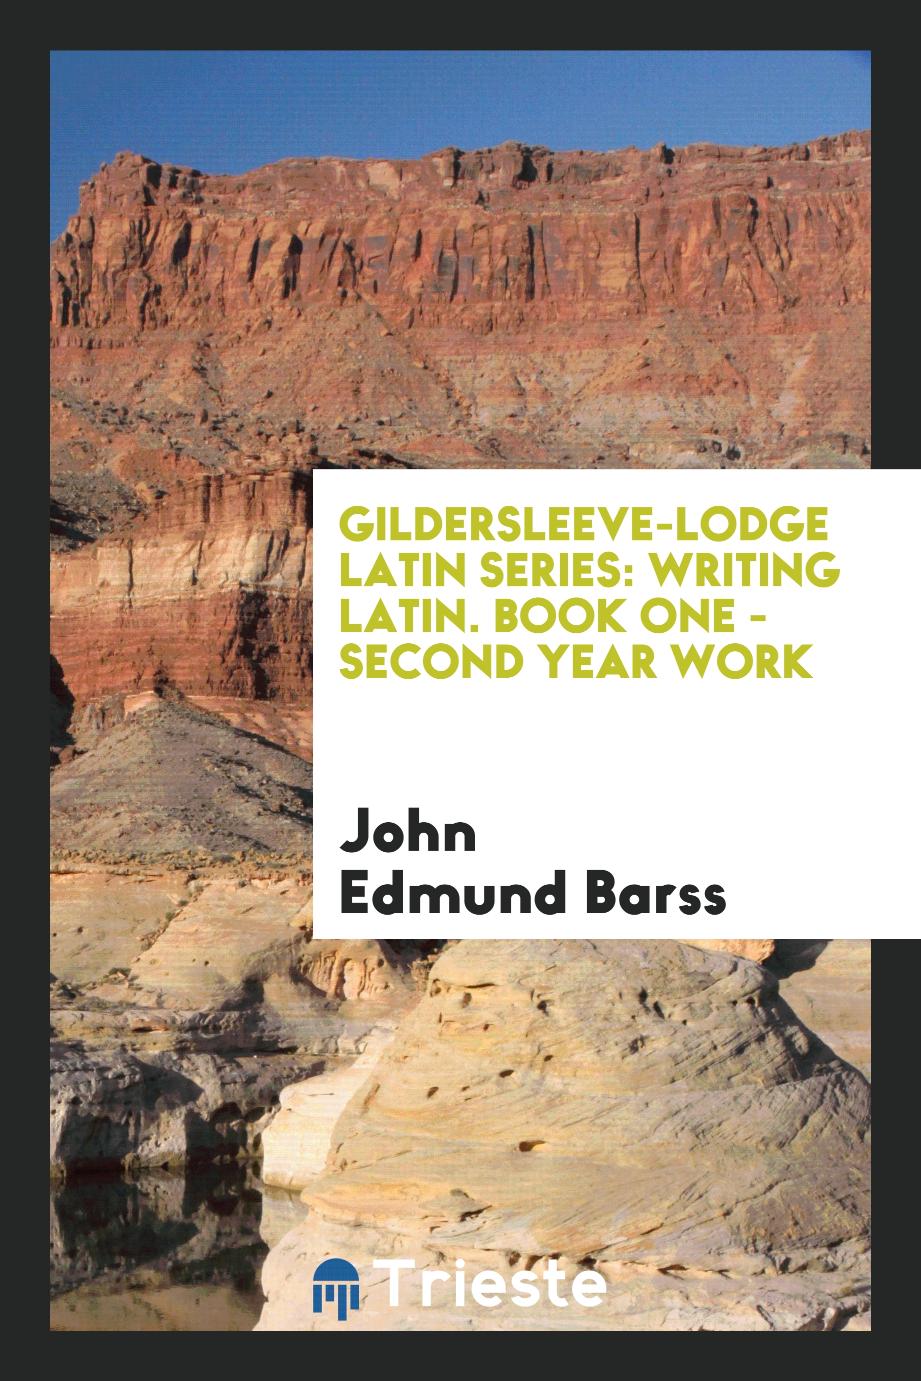 Gildersleeve-Lodge Latin Series: Writing Latin. Book One - Second Year Work